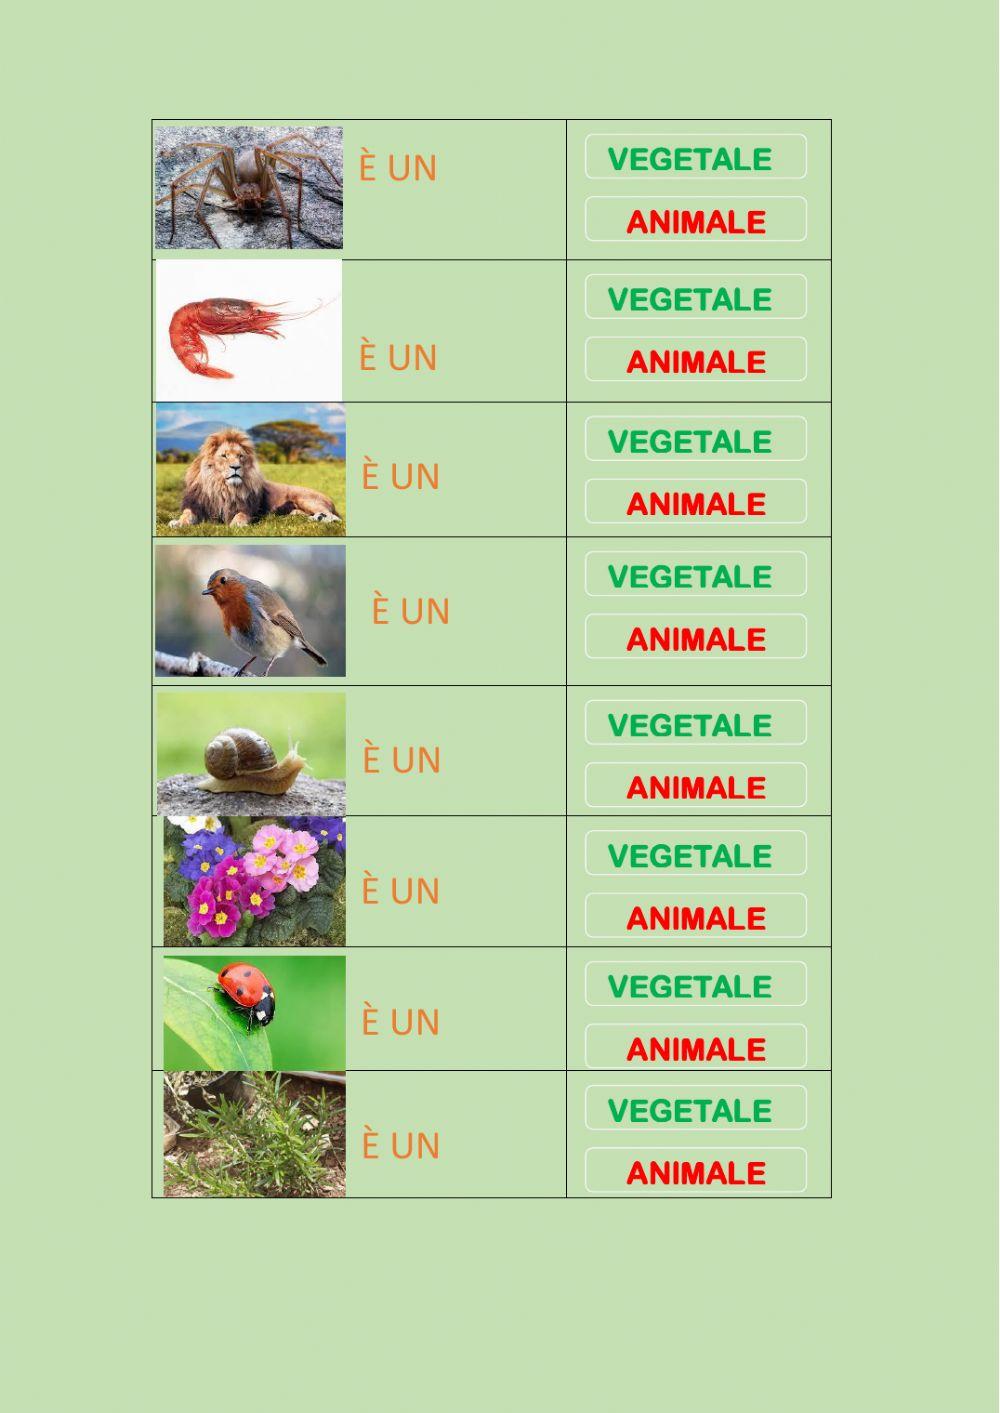 Vegetale o animale?